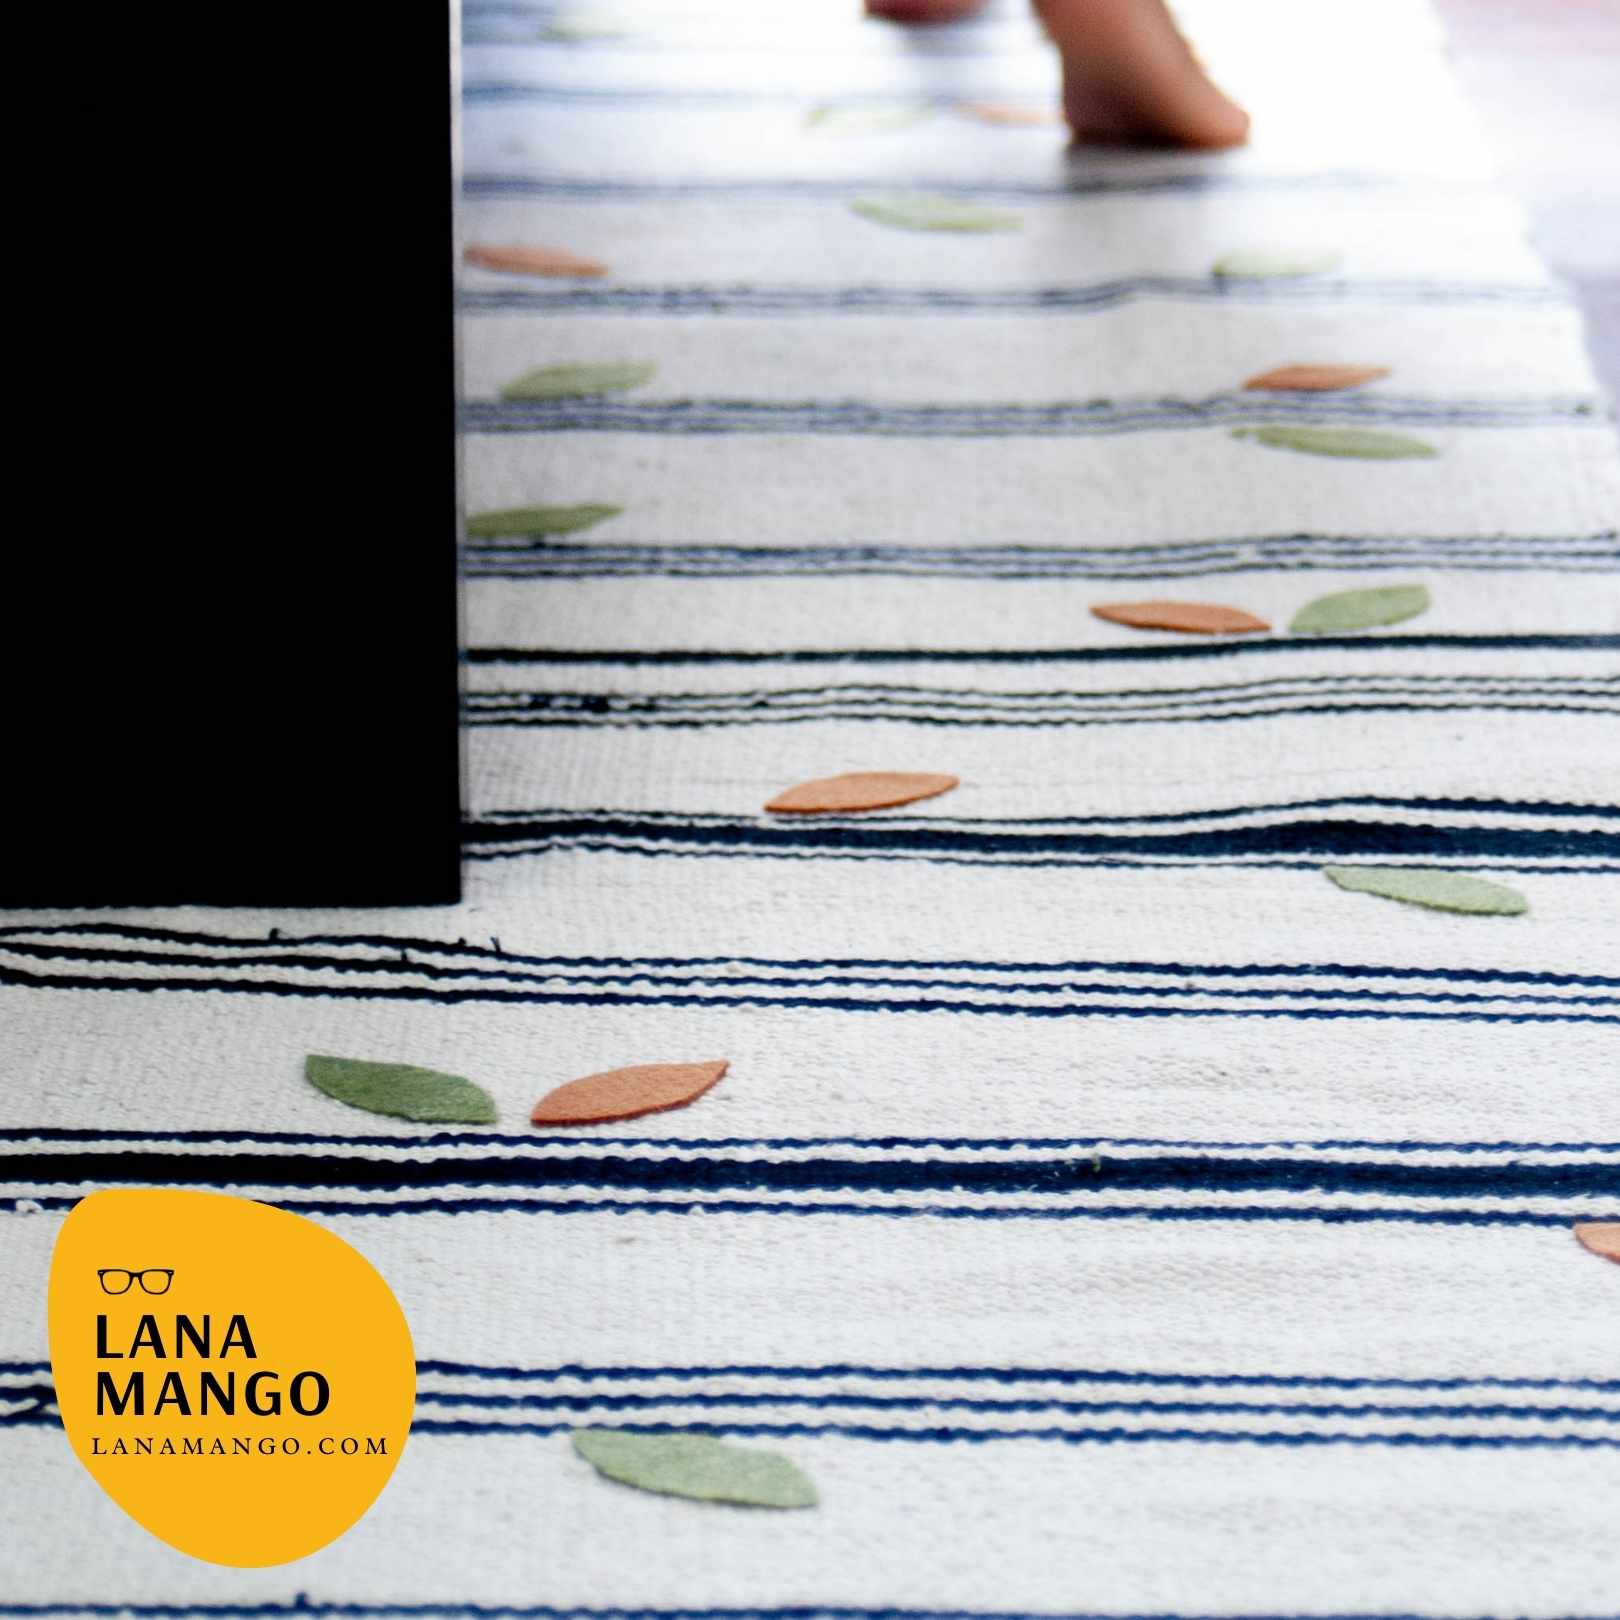 Easy diy ikea runner rug – make a cute custom runner by sewing together small ikea rugs